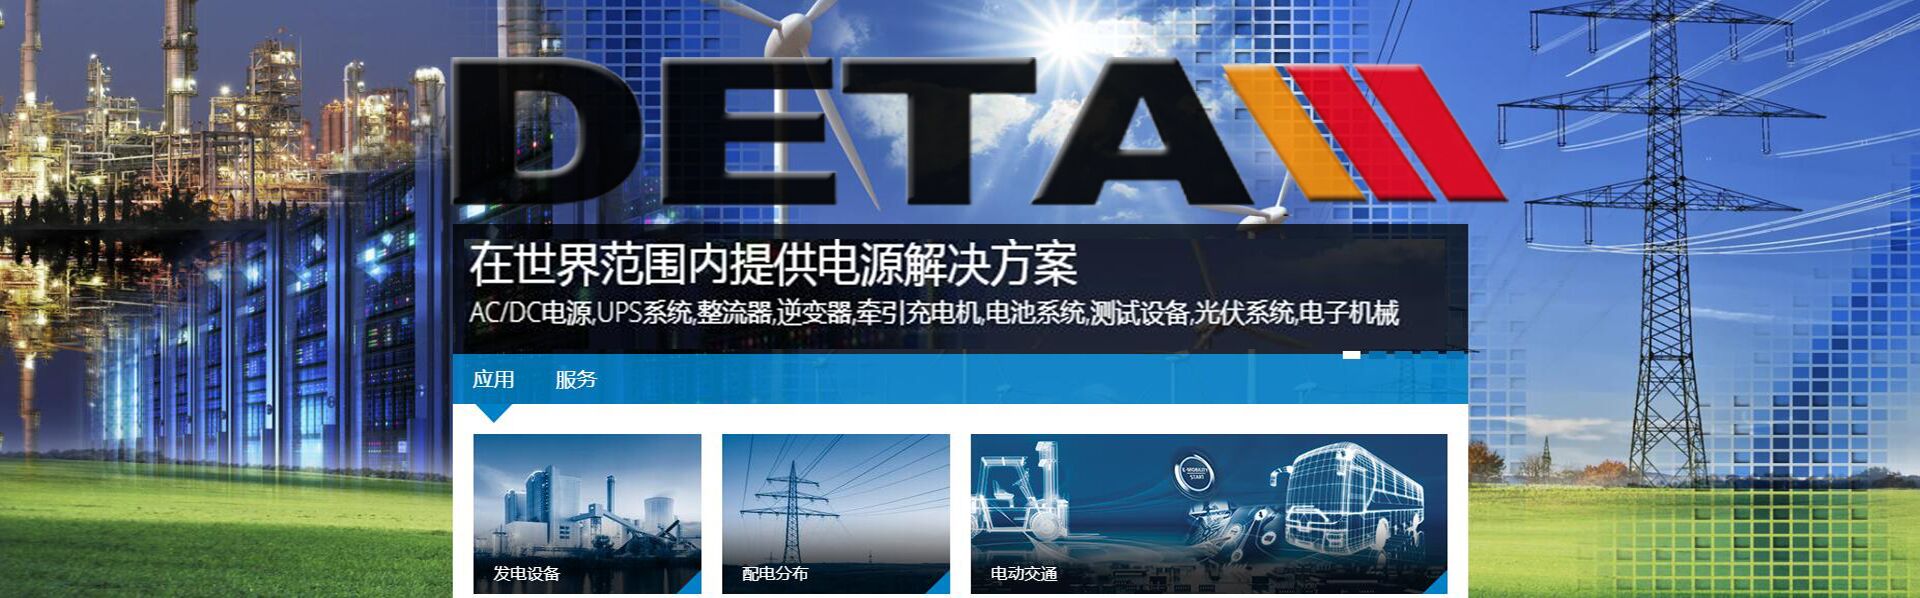 DETA在世界范围内提供电源解决方案